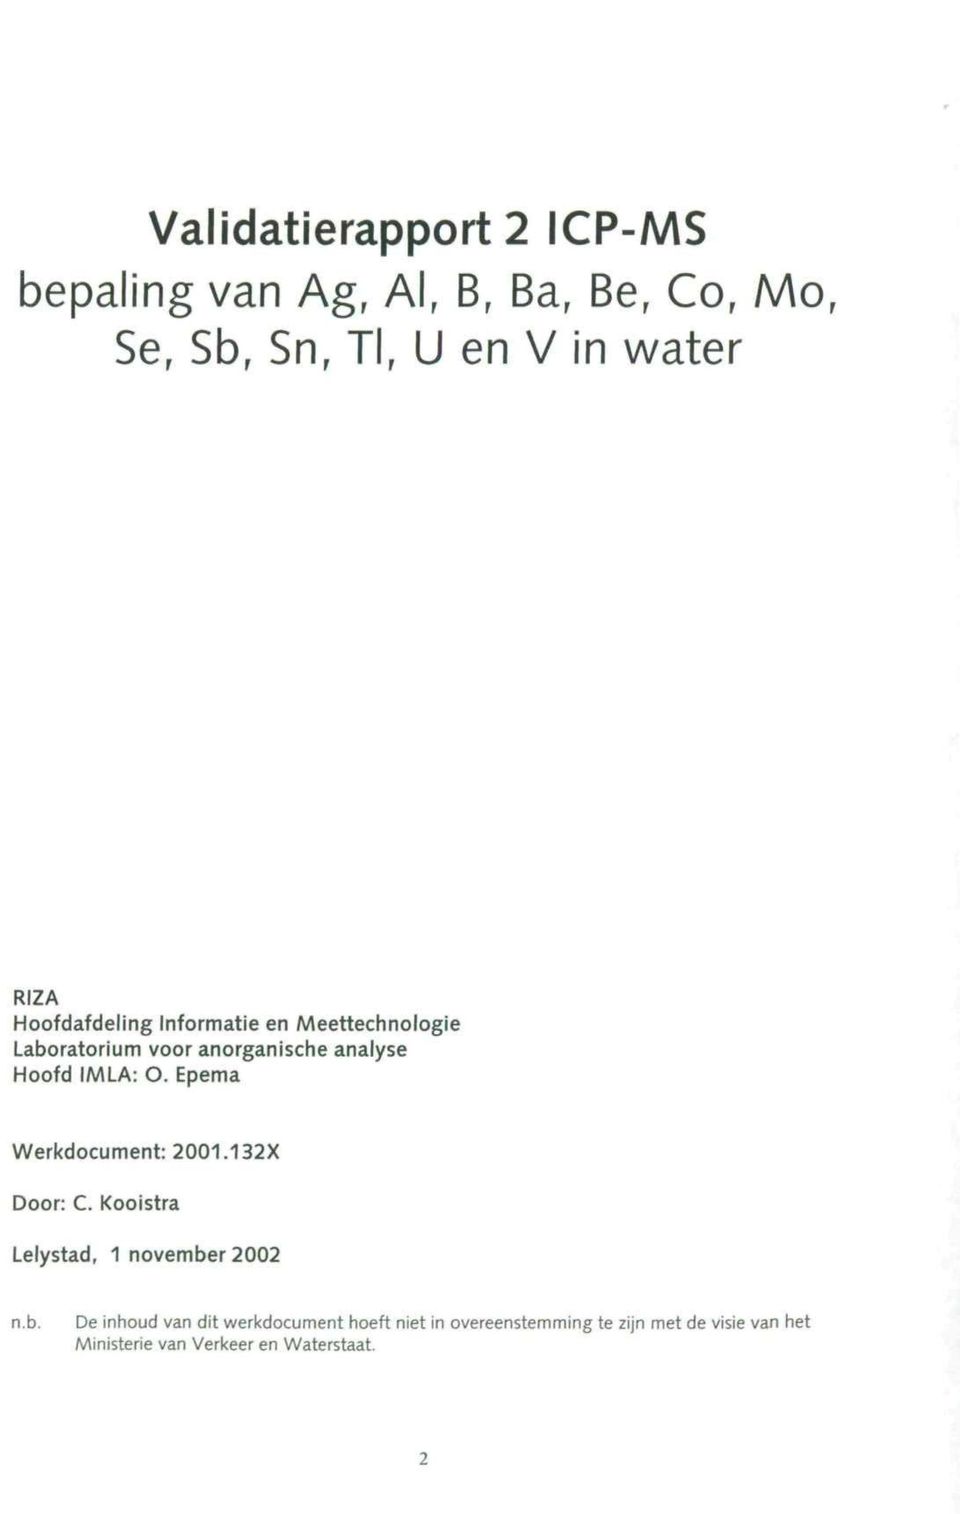 Epema Werkdocument: 2001.132X Door: C. Kooistra Lelystad, 1 novembe